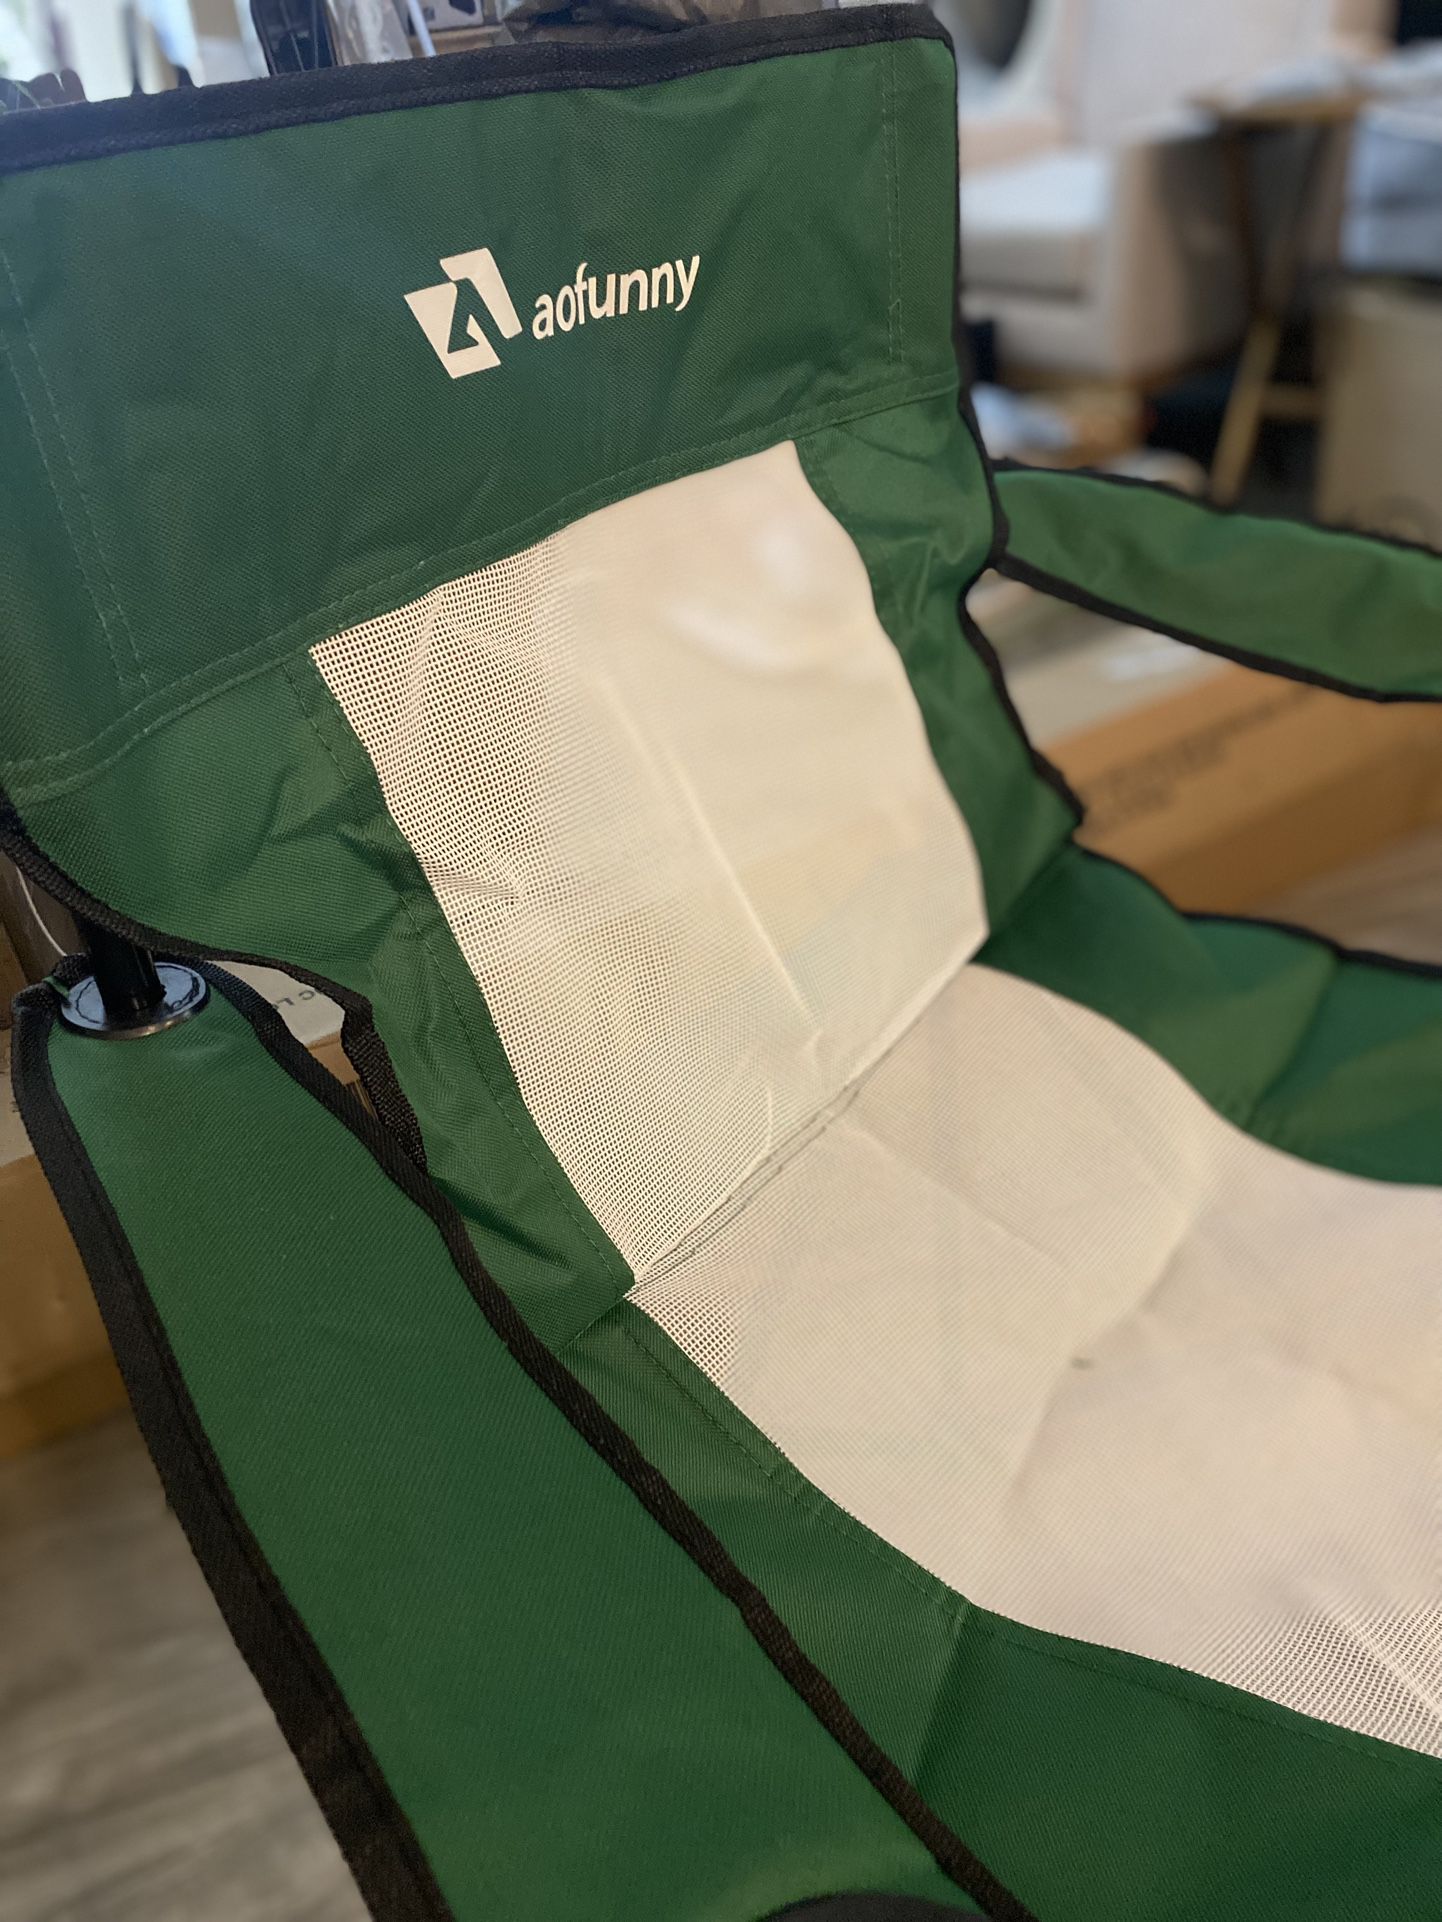 Aofunny Camping 2 Chairs 